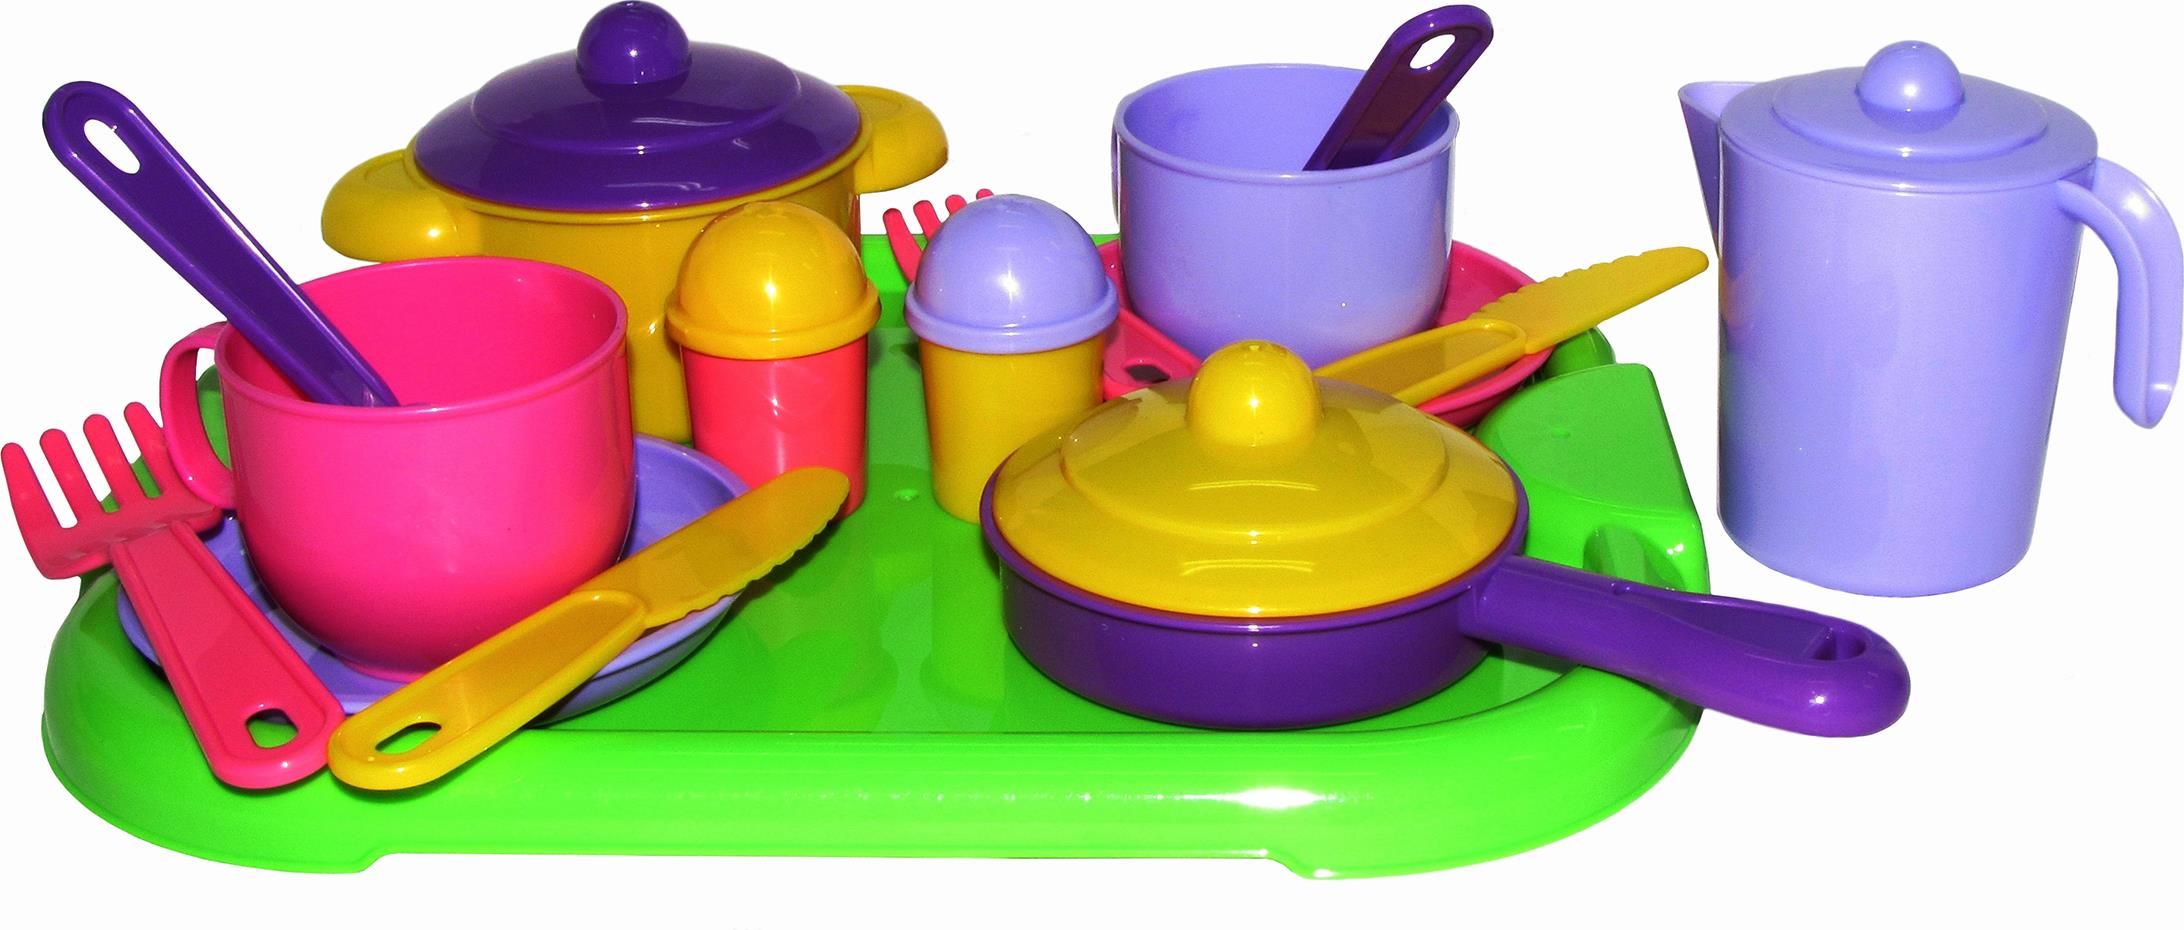 картинки посуда для малышей